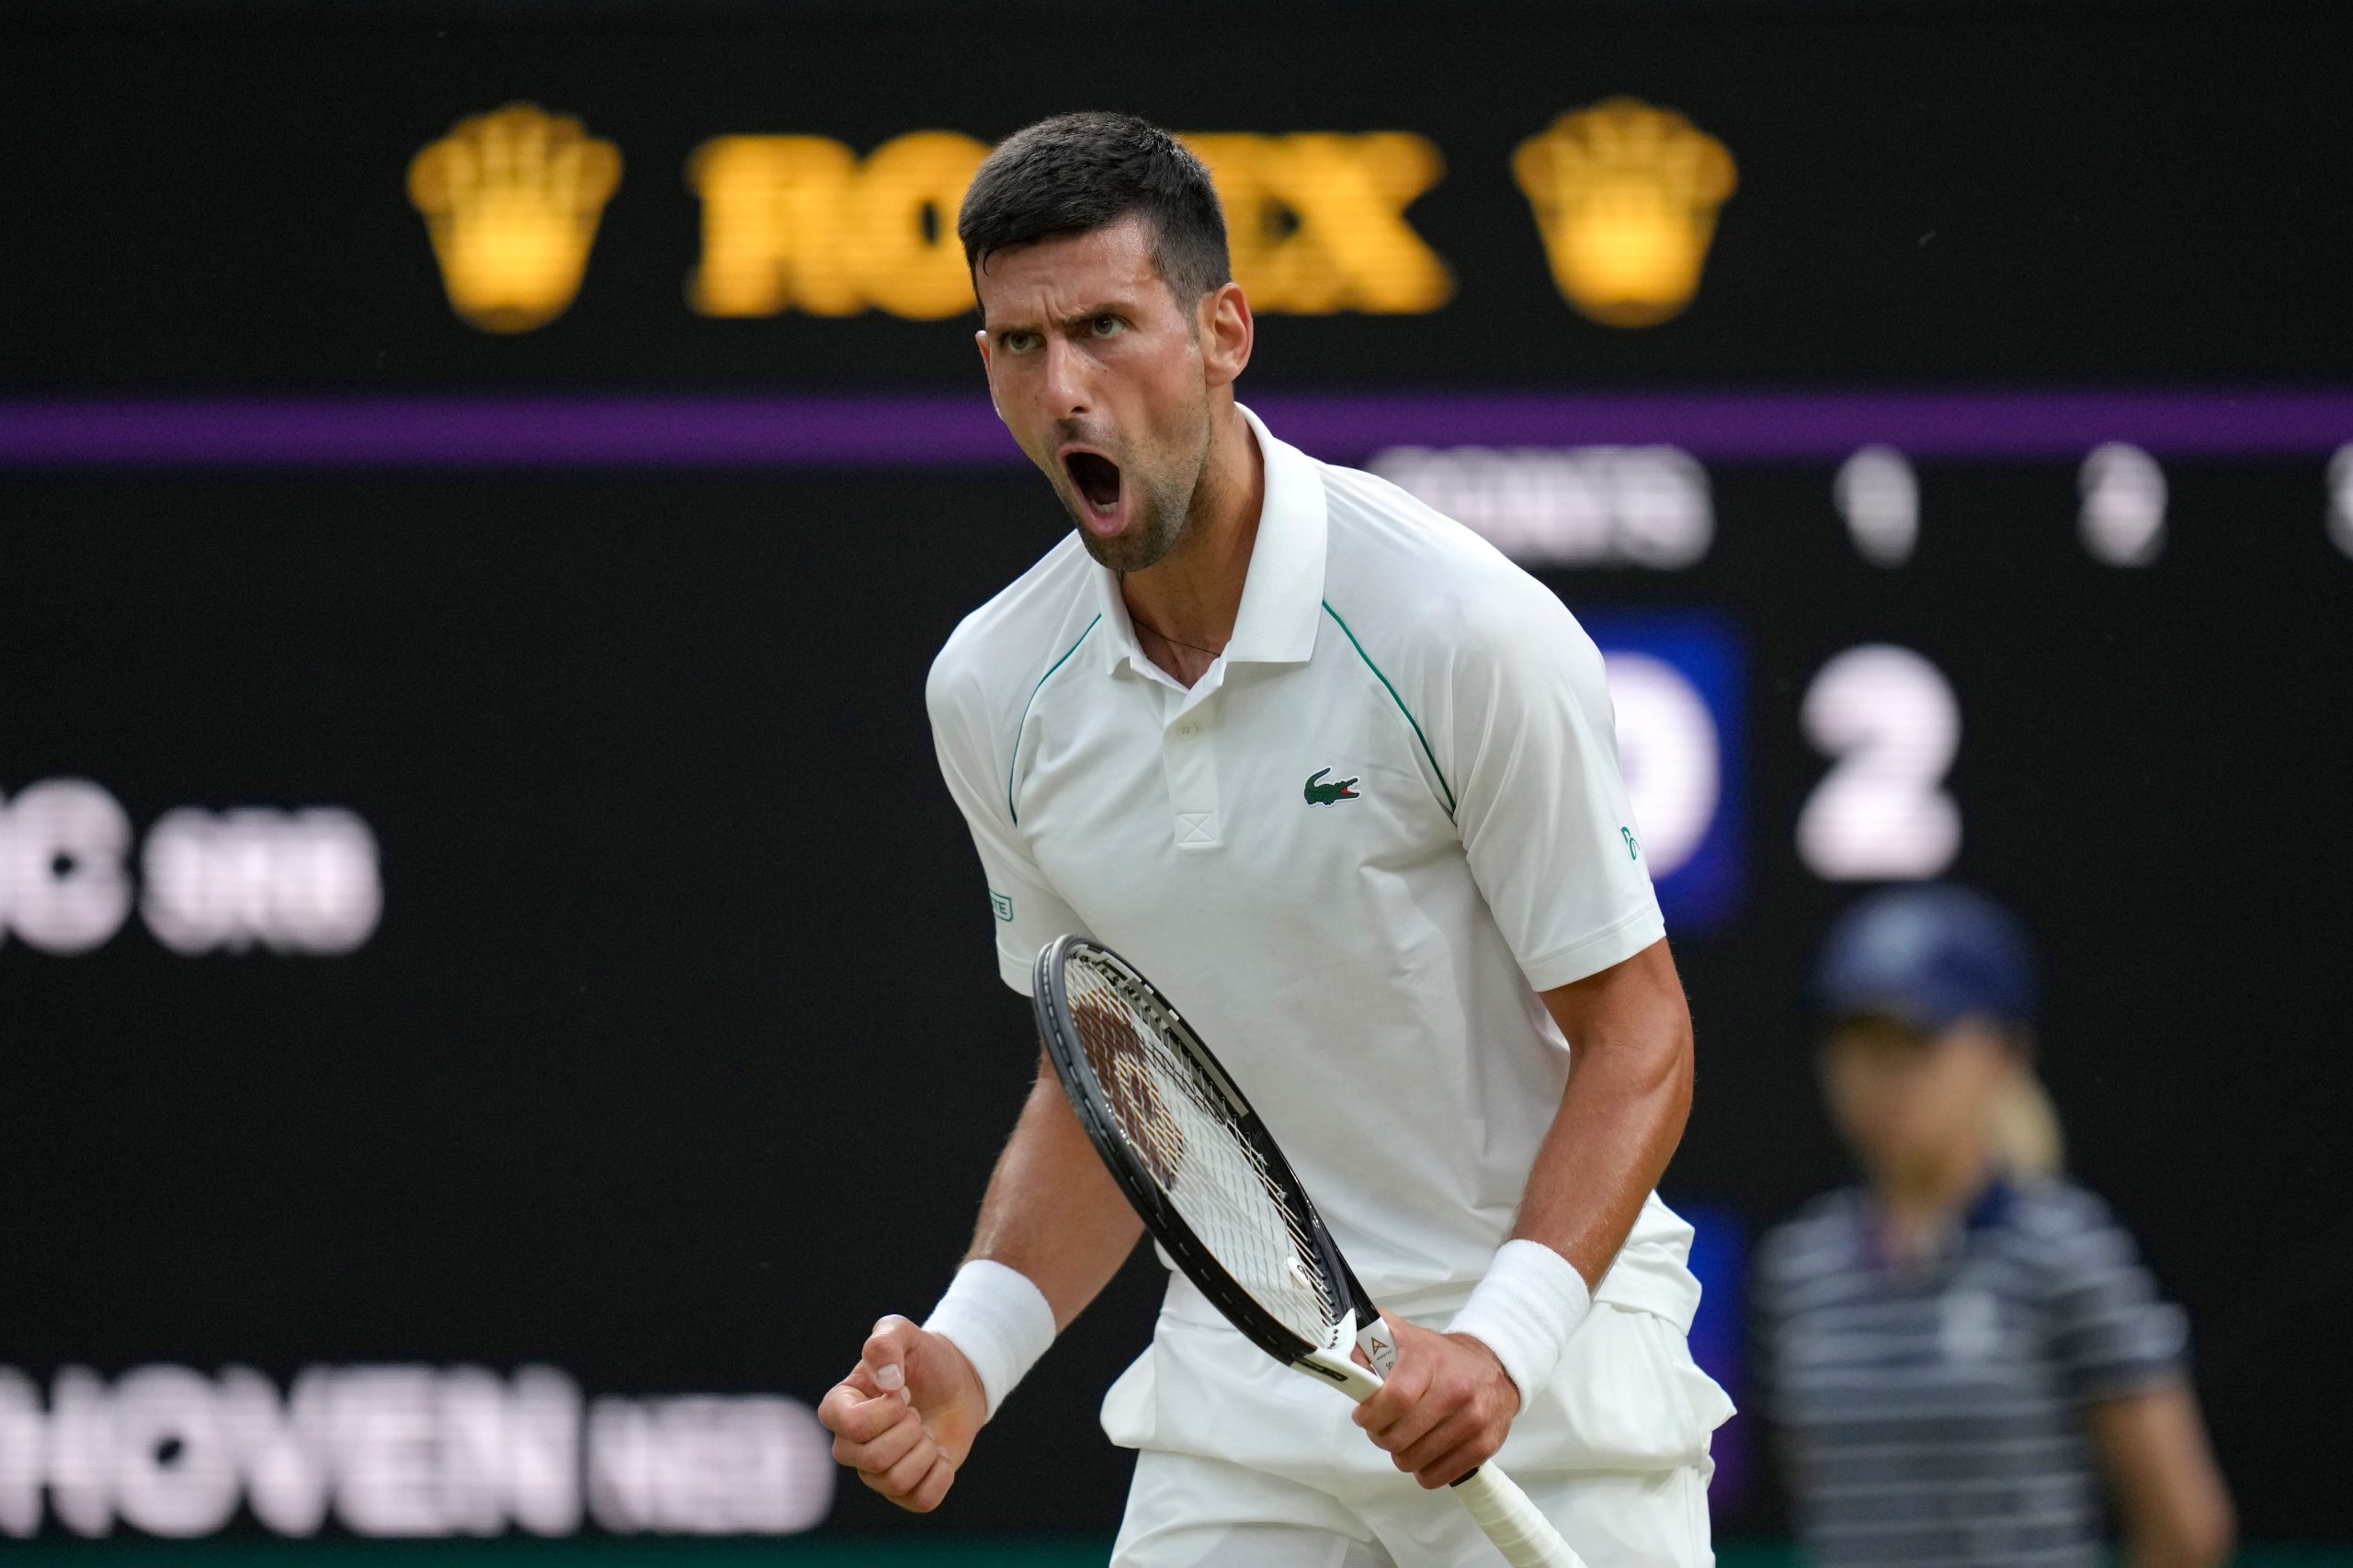 Watch: Novak Djokovic gets booed after blowing kisses at partisan Wimbledon crowd